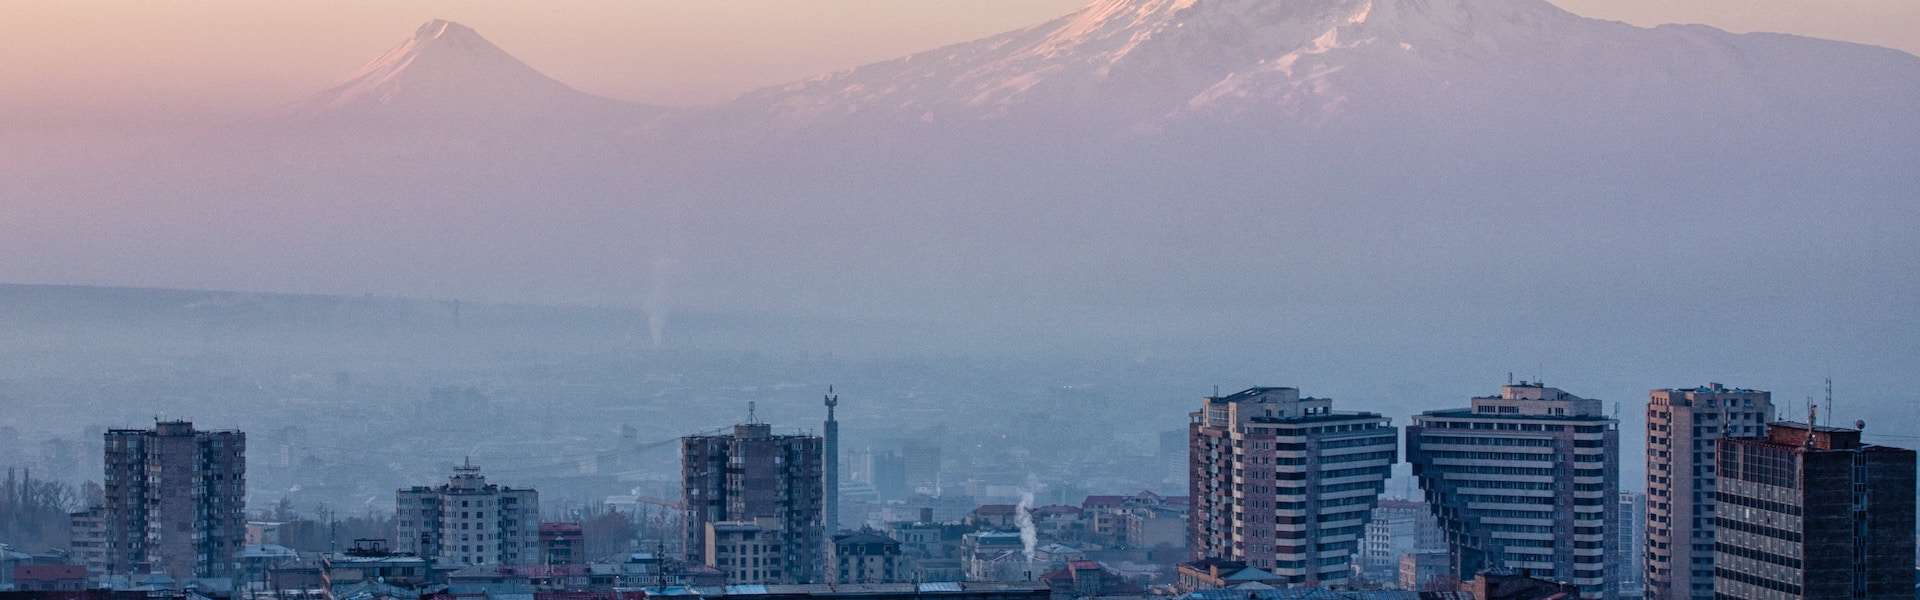 yerevan armenia city mountain urban skyline eastern europe